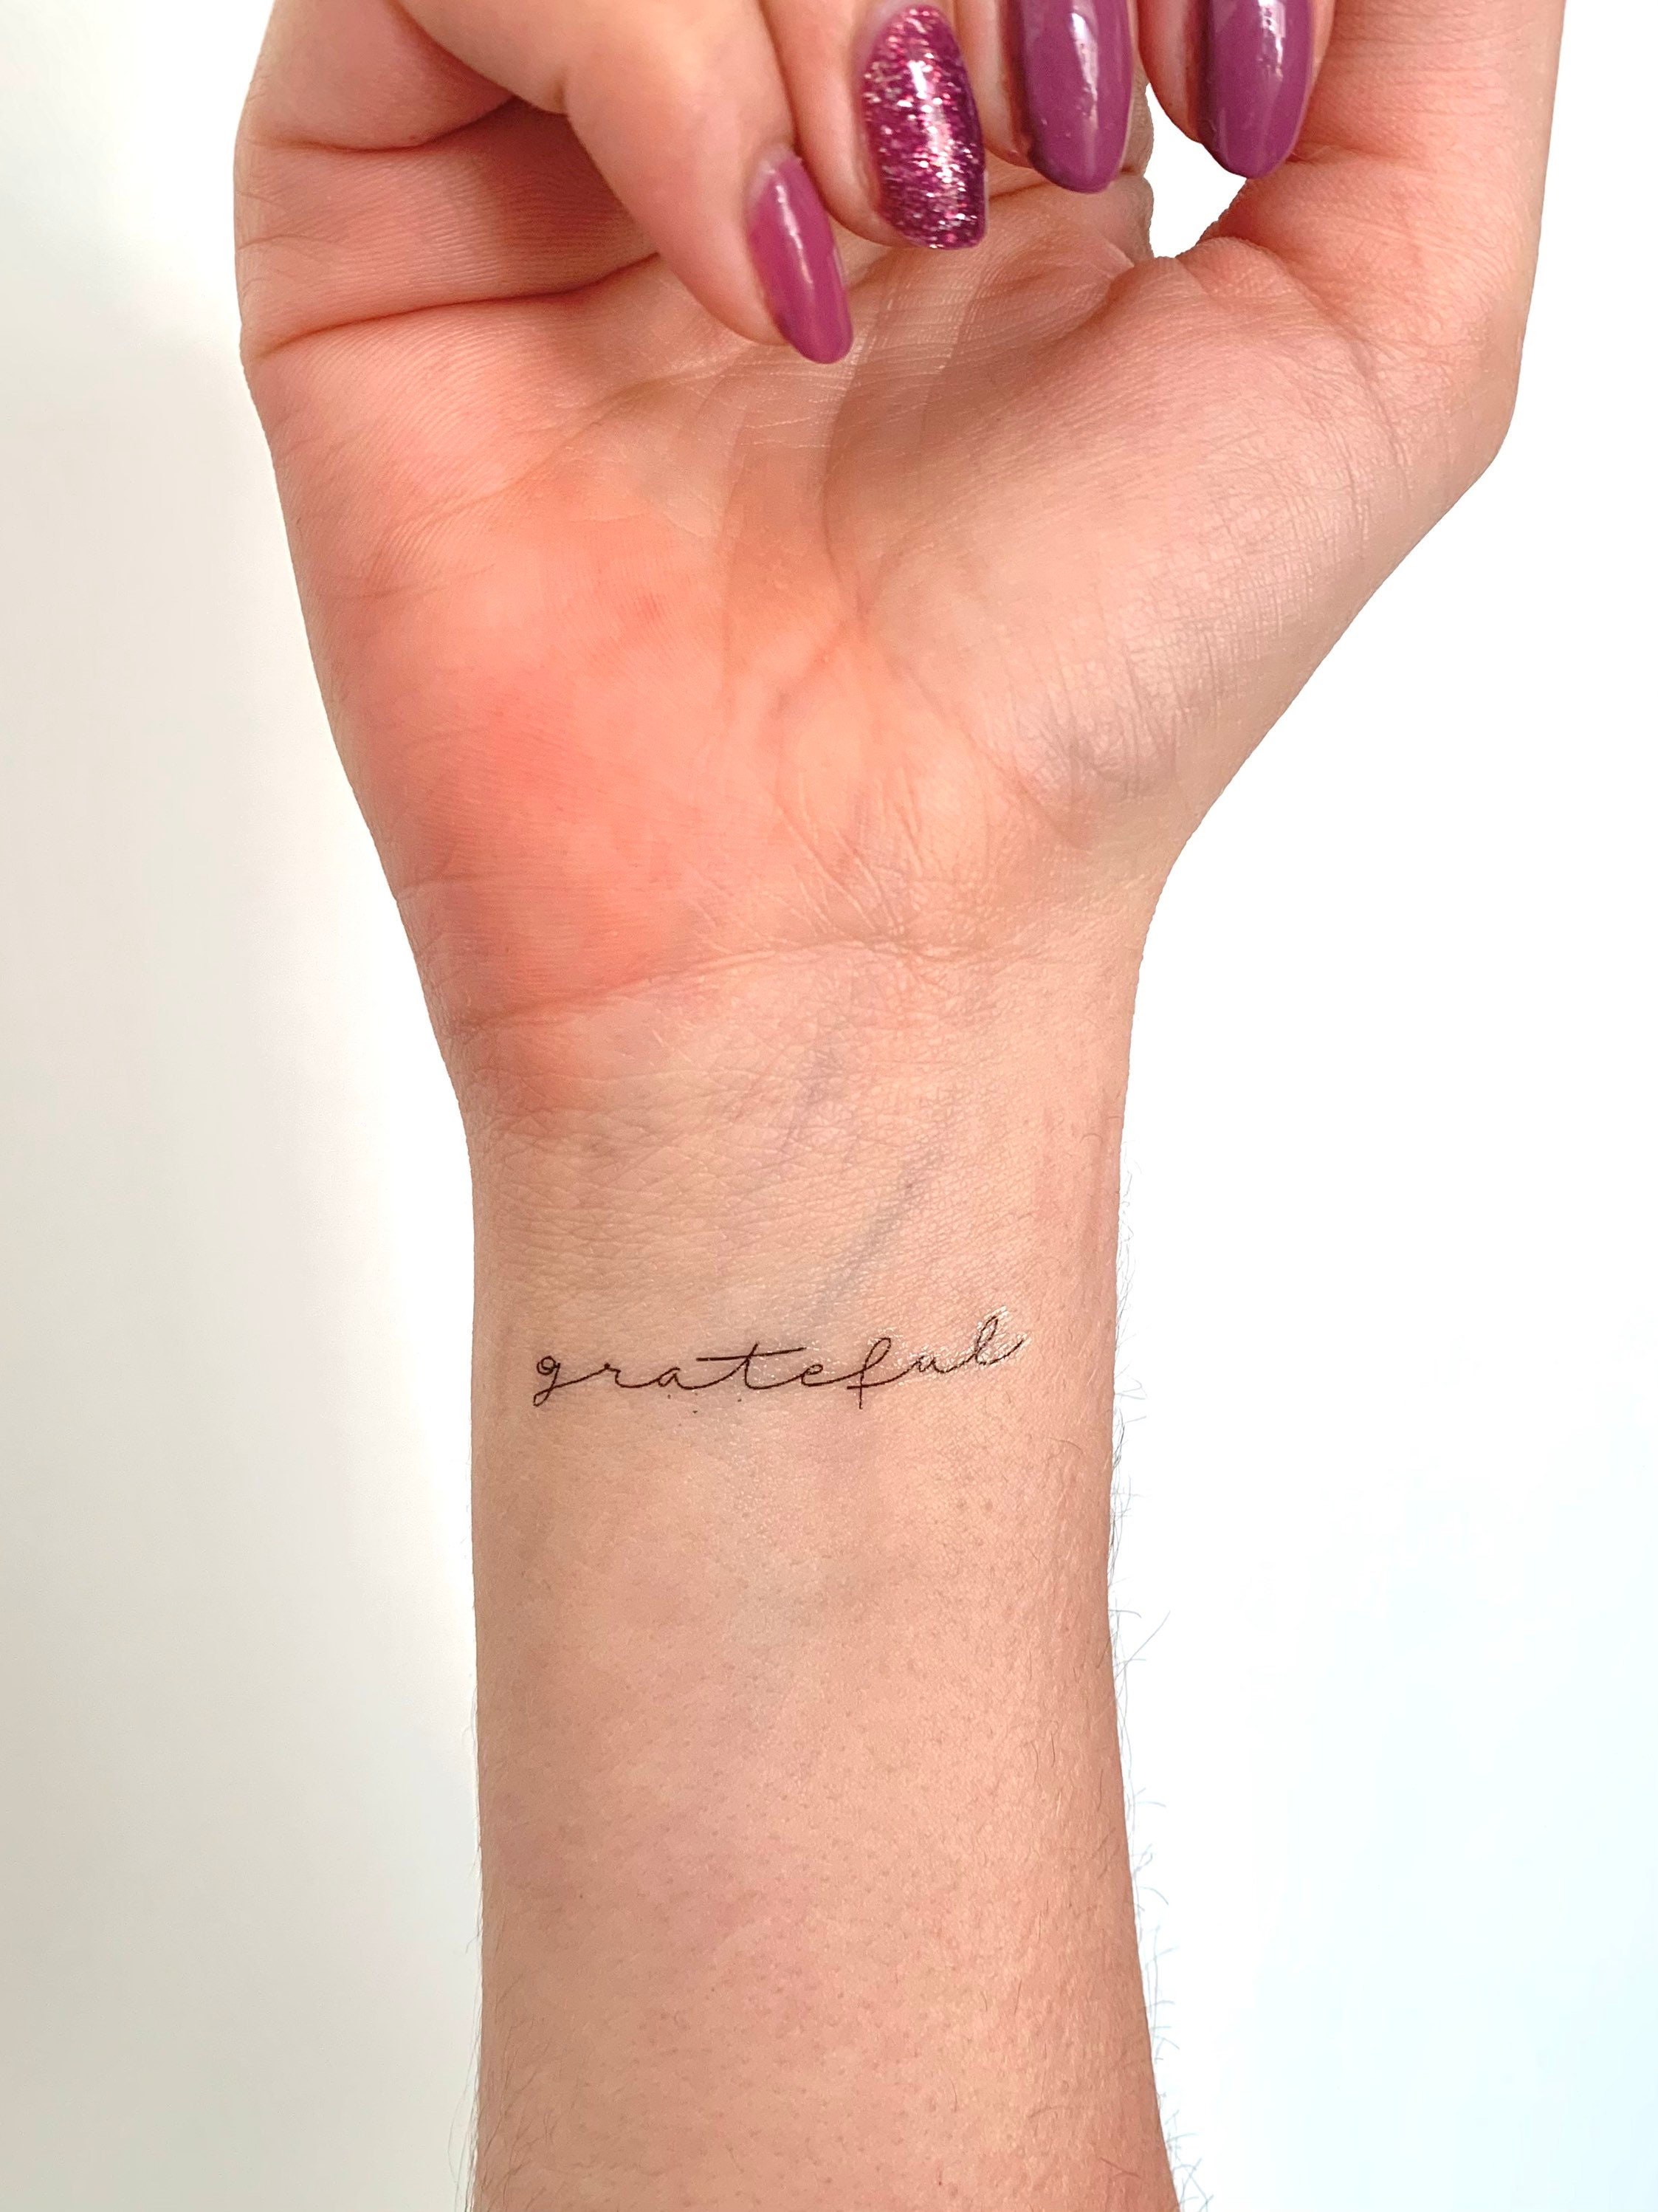 Gratitude tattoos that remind us to be thankful | MamasLatinas.com